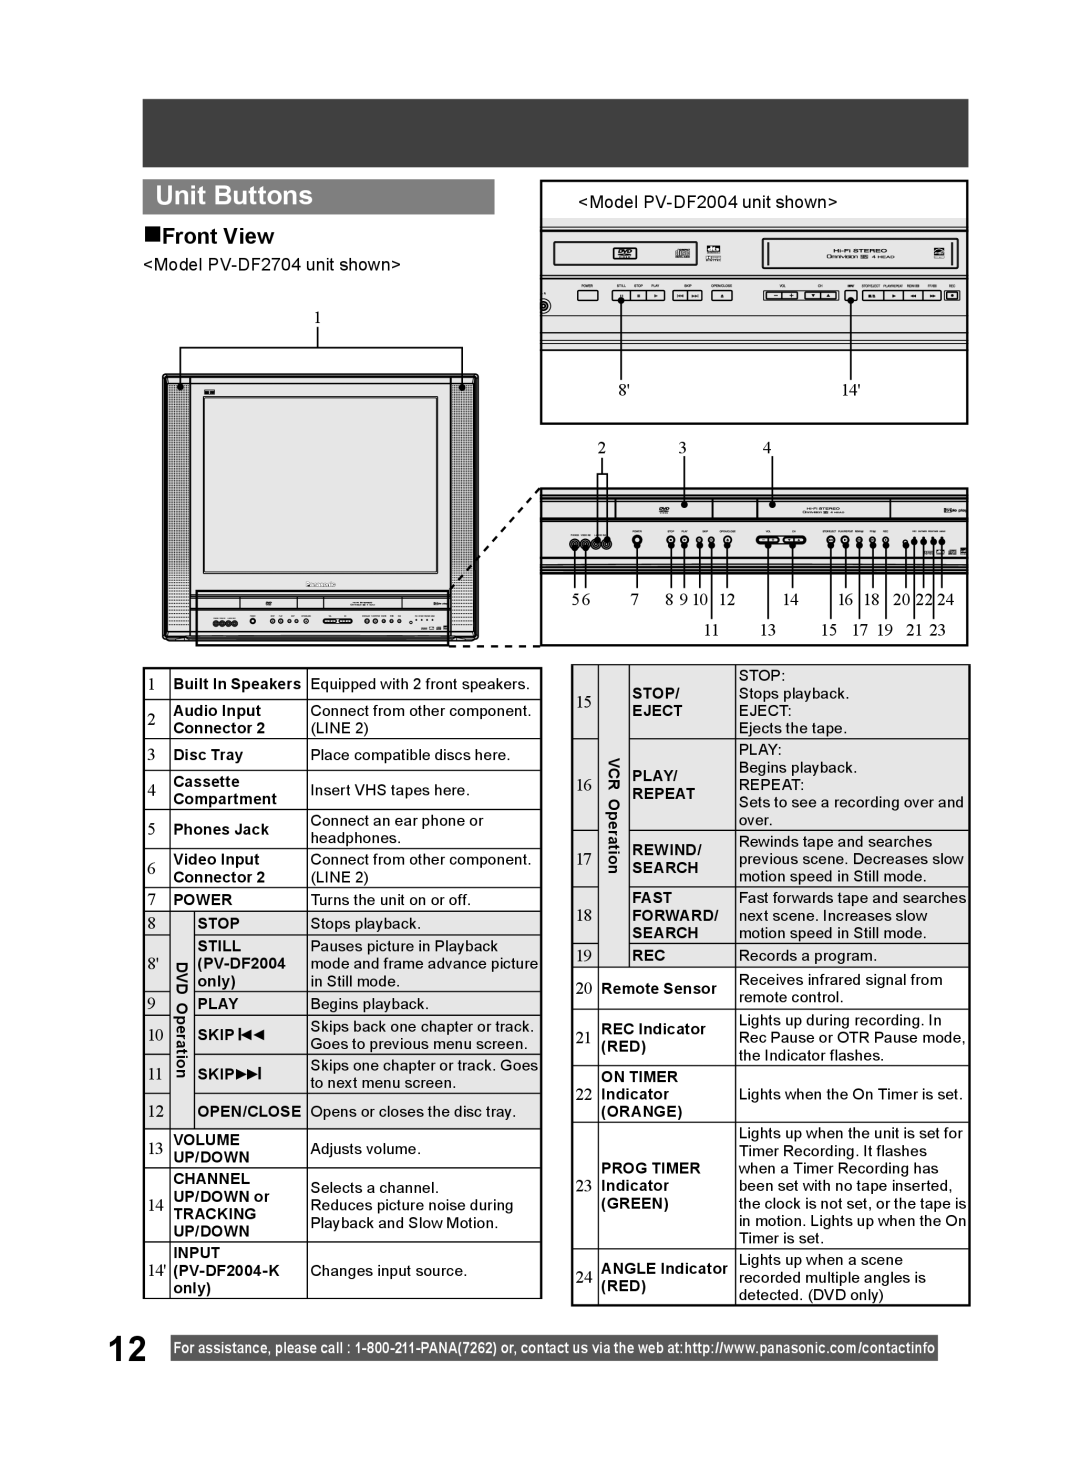 Panasonic PV DF2004, PV DF2704 manual Unit Buttons, Front View 